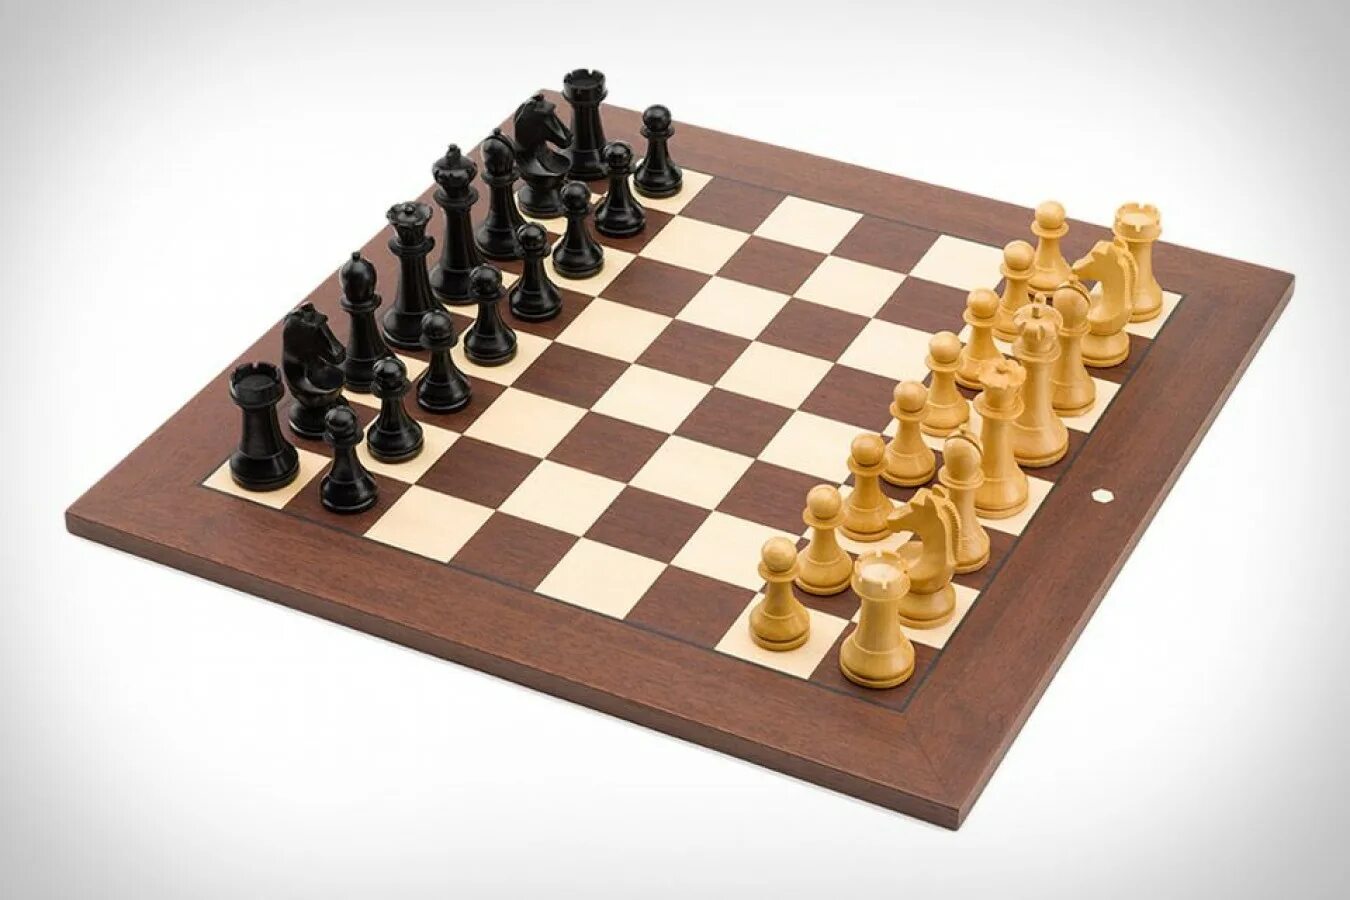 О шахмате. Шахматы Стаунтон ФИДЕ. Шахматные фигуры стандарт ФИДЕ. Расстановка шахмат. Шахматные фигурки.